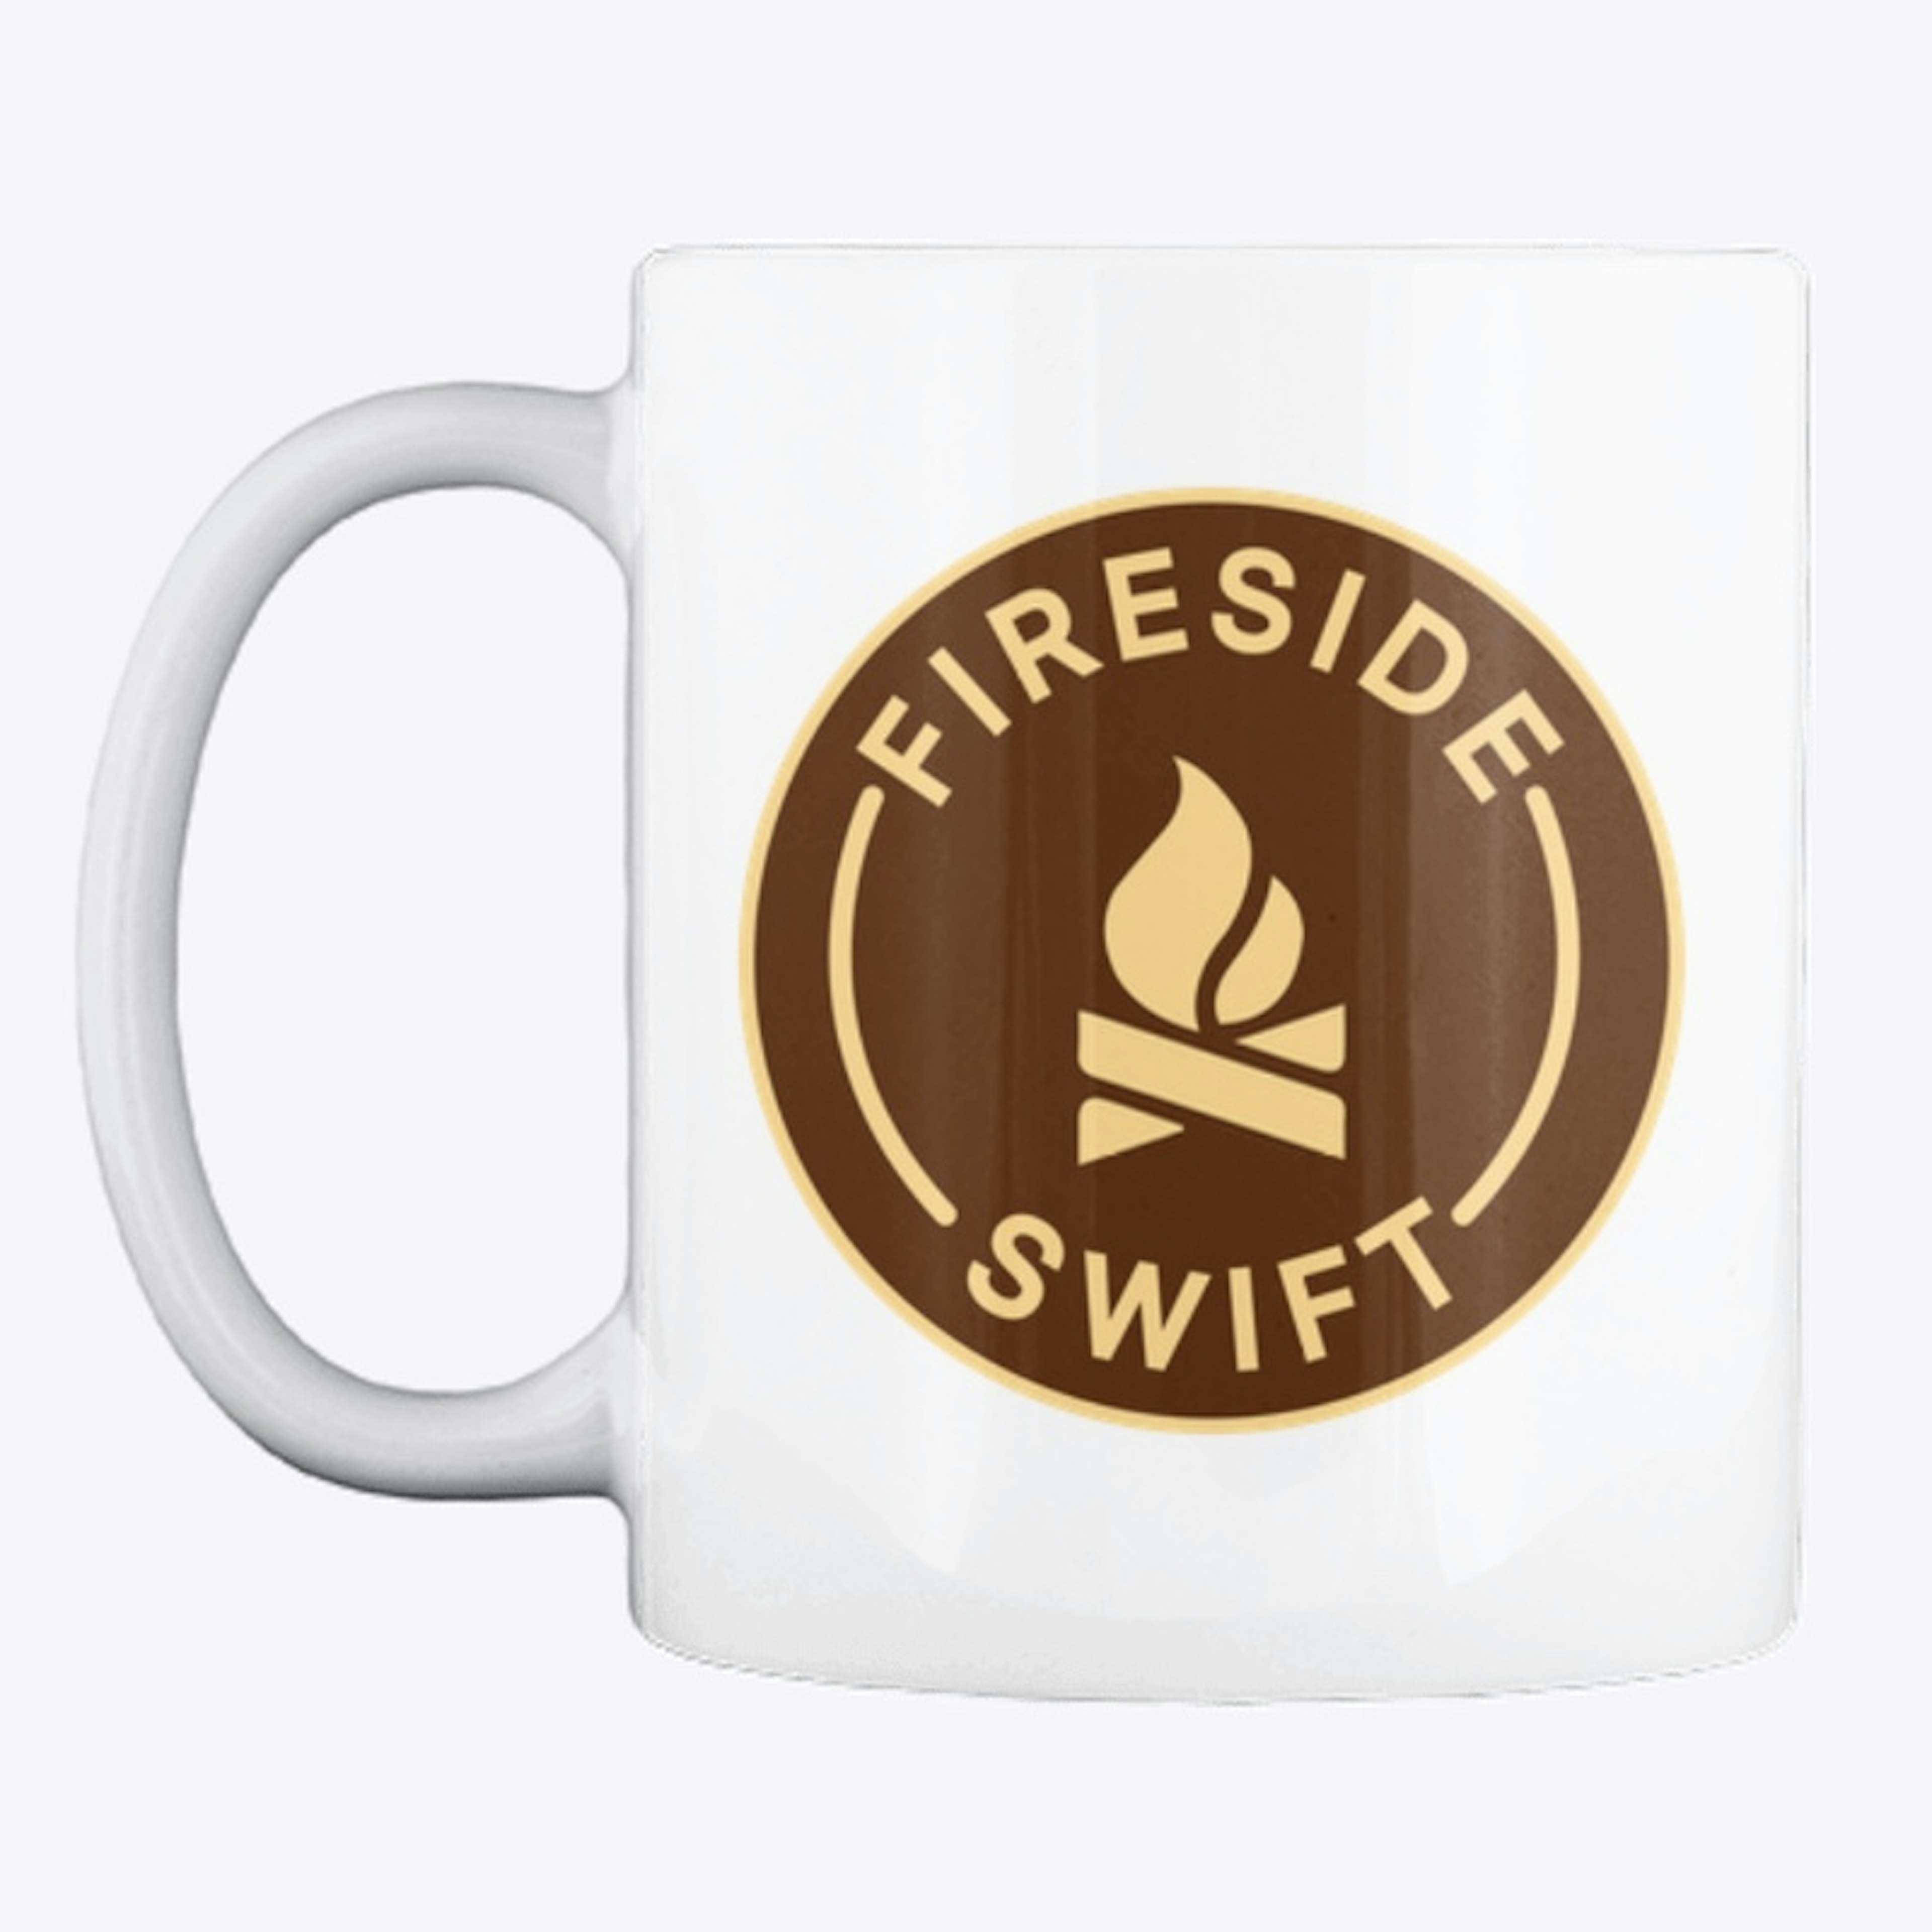 Fireside Mug - Classic